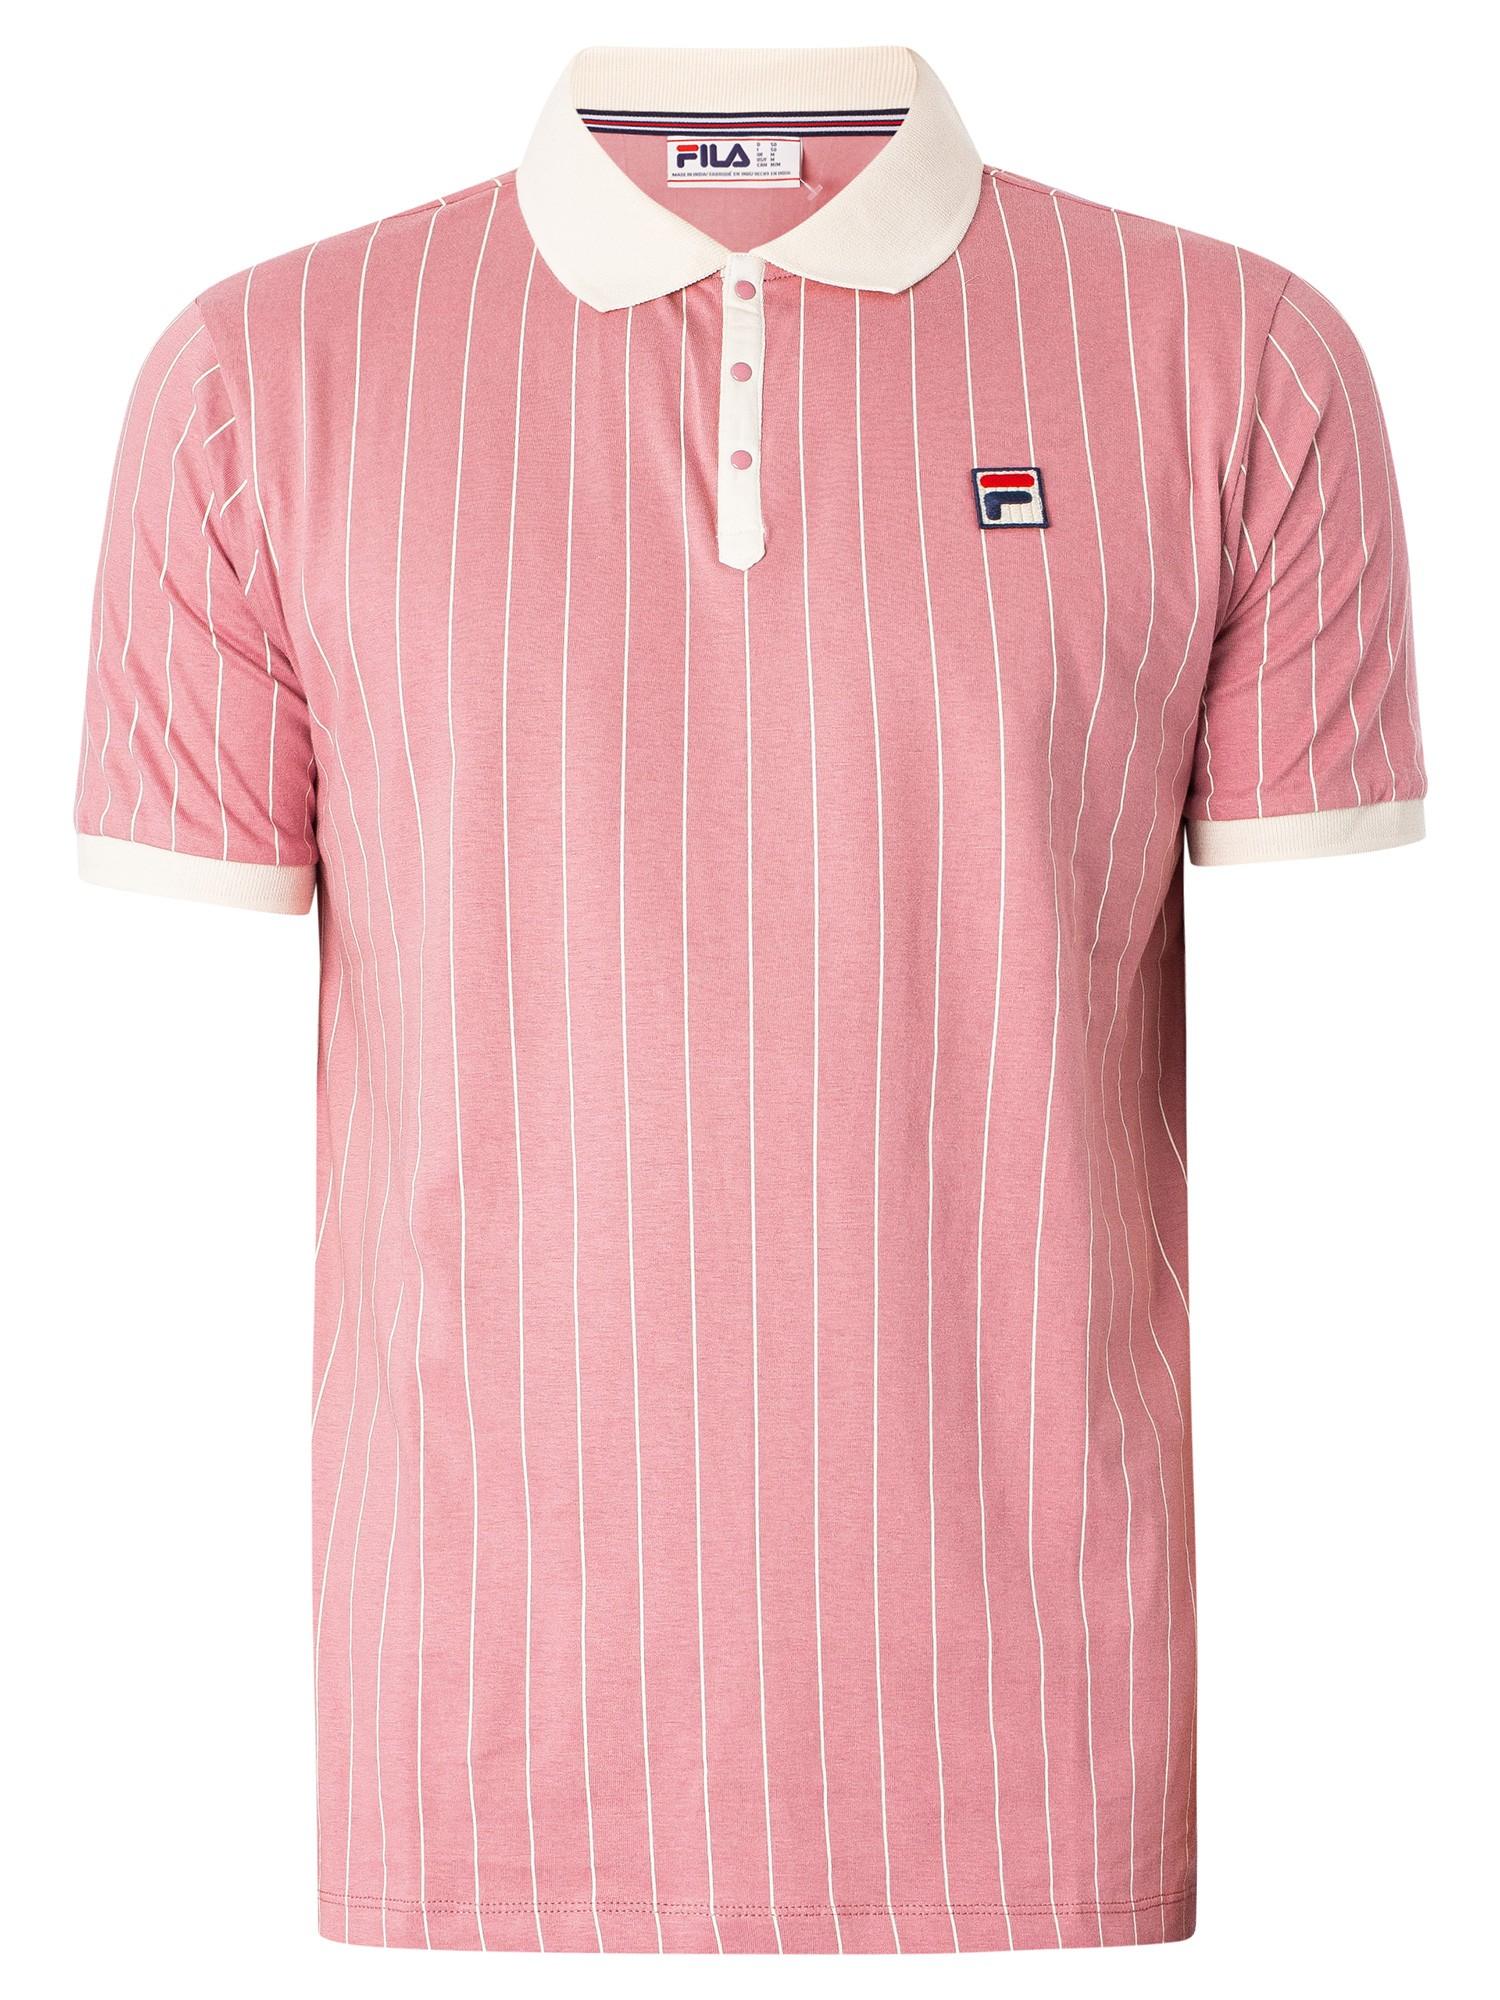 Fila Classic Vintage Striped in Pink Men | Lyst